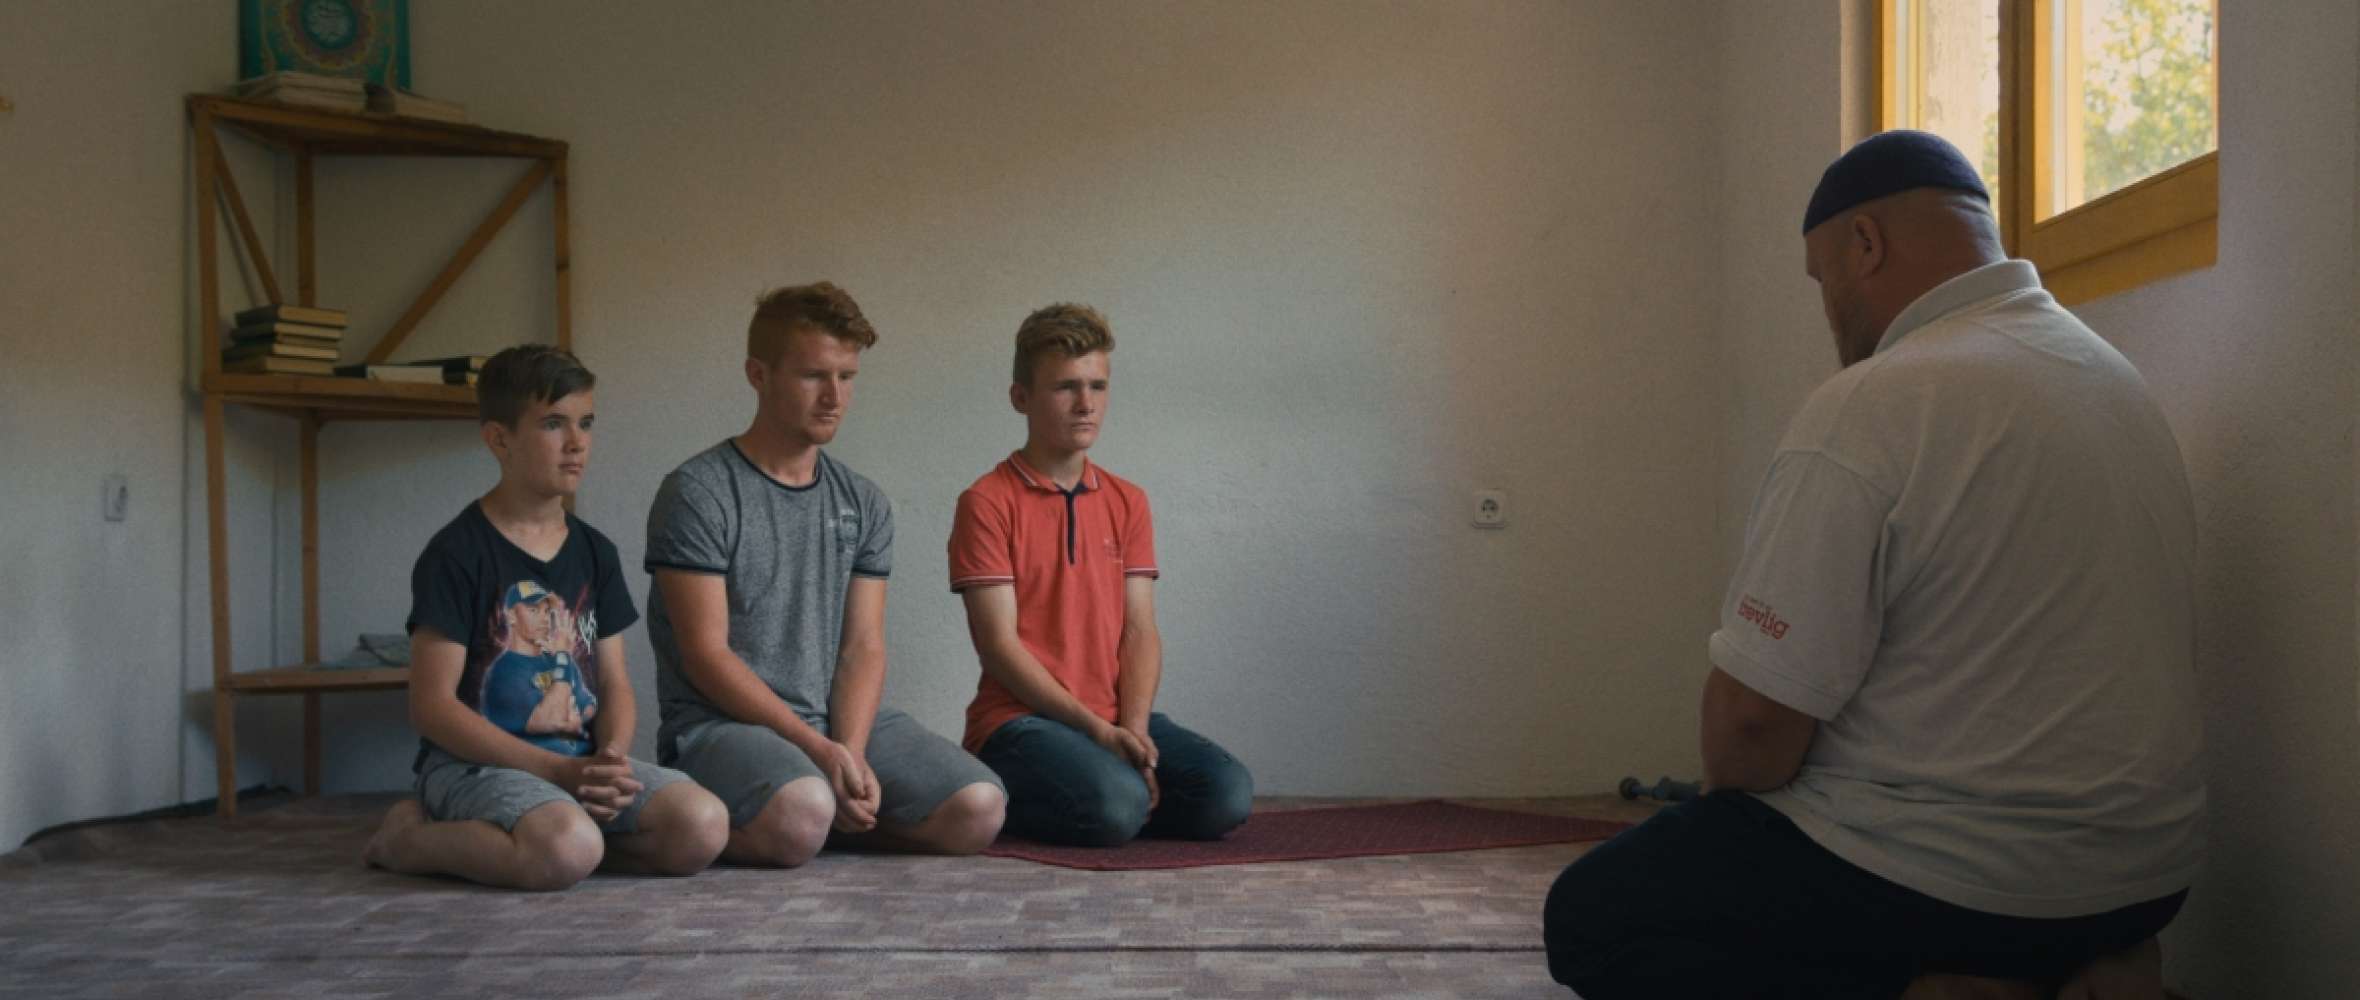 Brotherhood is the best Czech documentary at Ji.hlava IDFF 2021